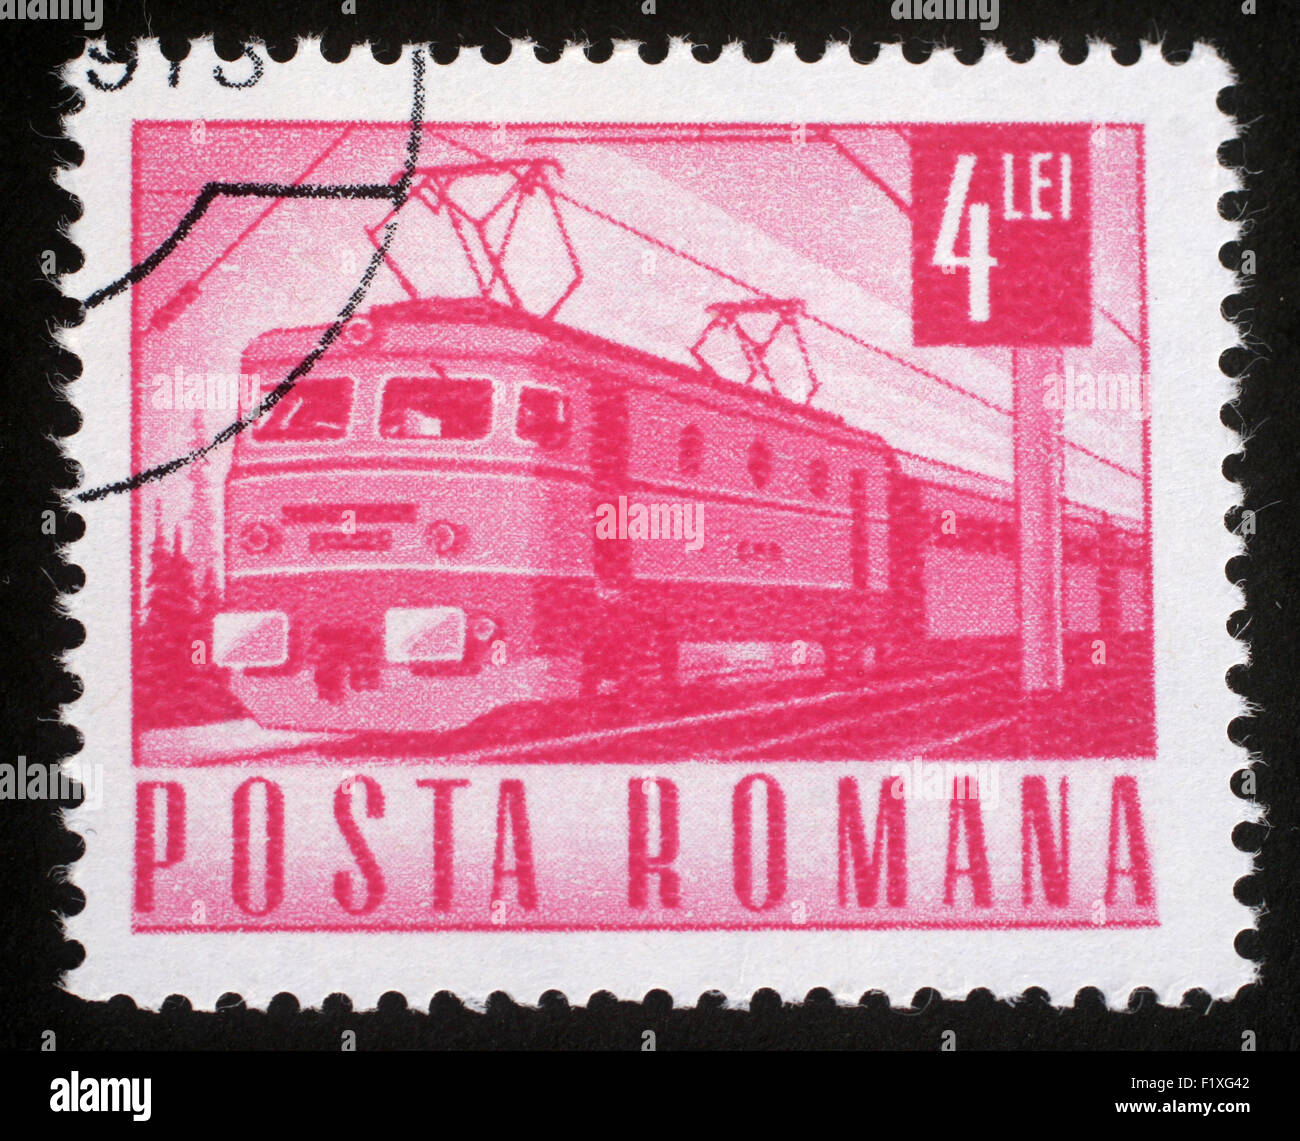 Stamp printed in Romania shows Electric train, circa 1971 Stock Photo